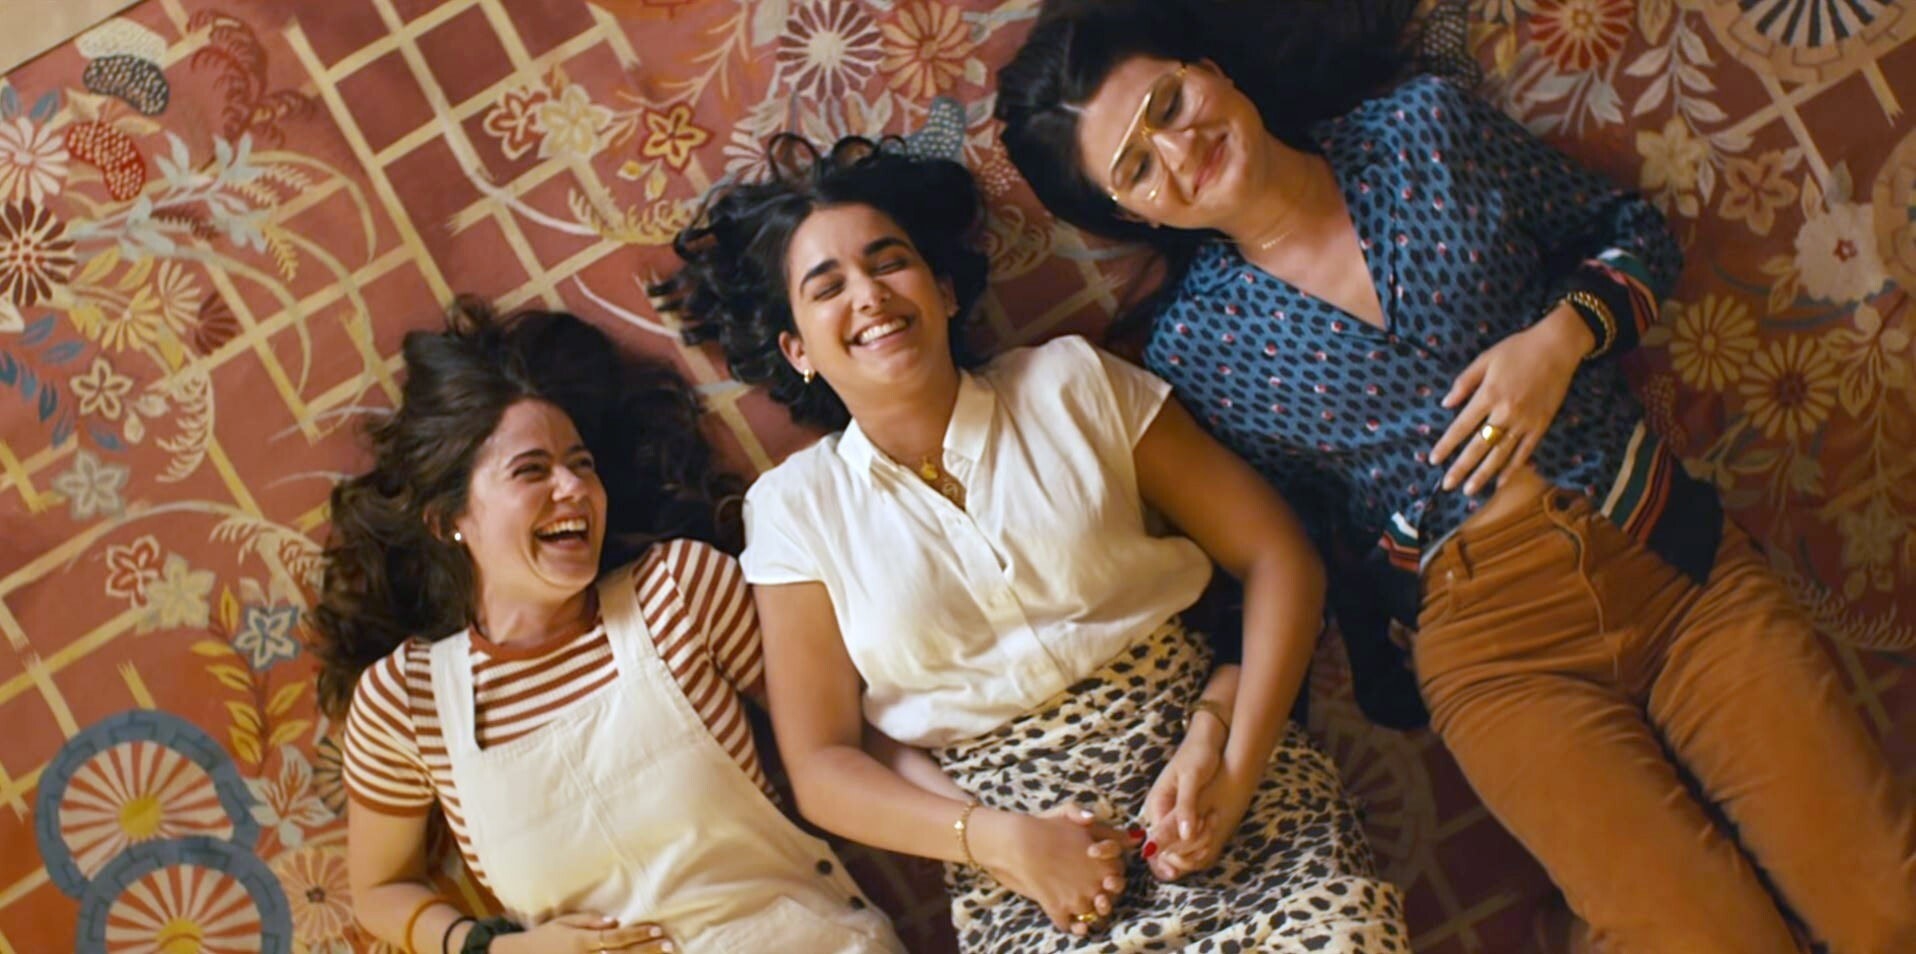 Molly Gordon, Geraldine Viswanathan, and Phillipa Soo laughing on the fllor